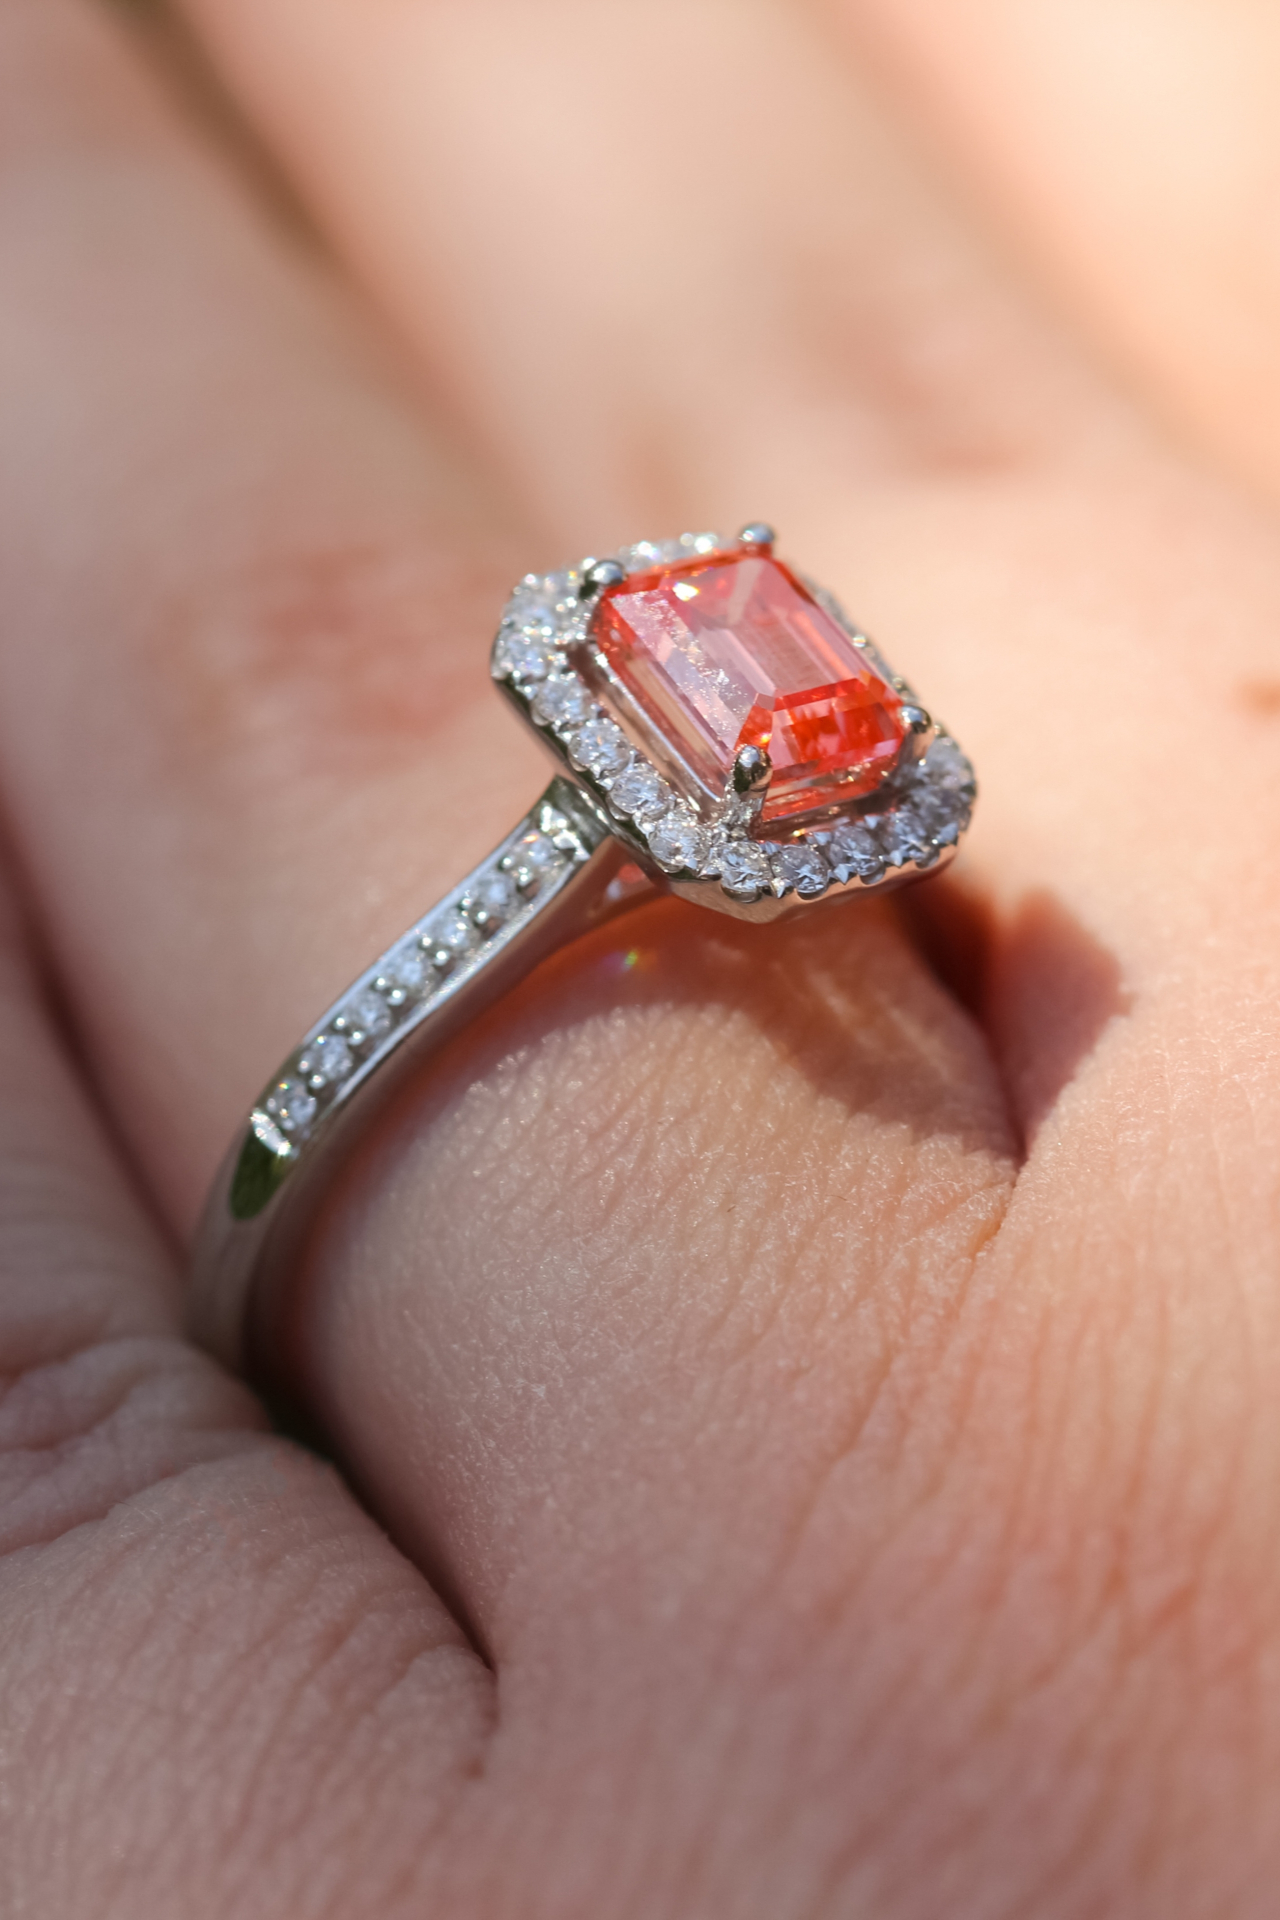 Benefits Of Wearing Diamond,வைர மோதிரத்தை இந்த விரலில் தான் போடணும்... ஏன்  தெரியுமா? - as per astrology which finger best for wear diamond ring -  Samayam Tamil